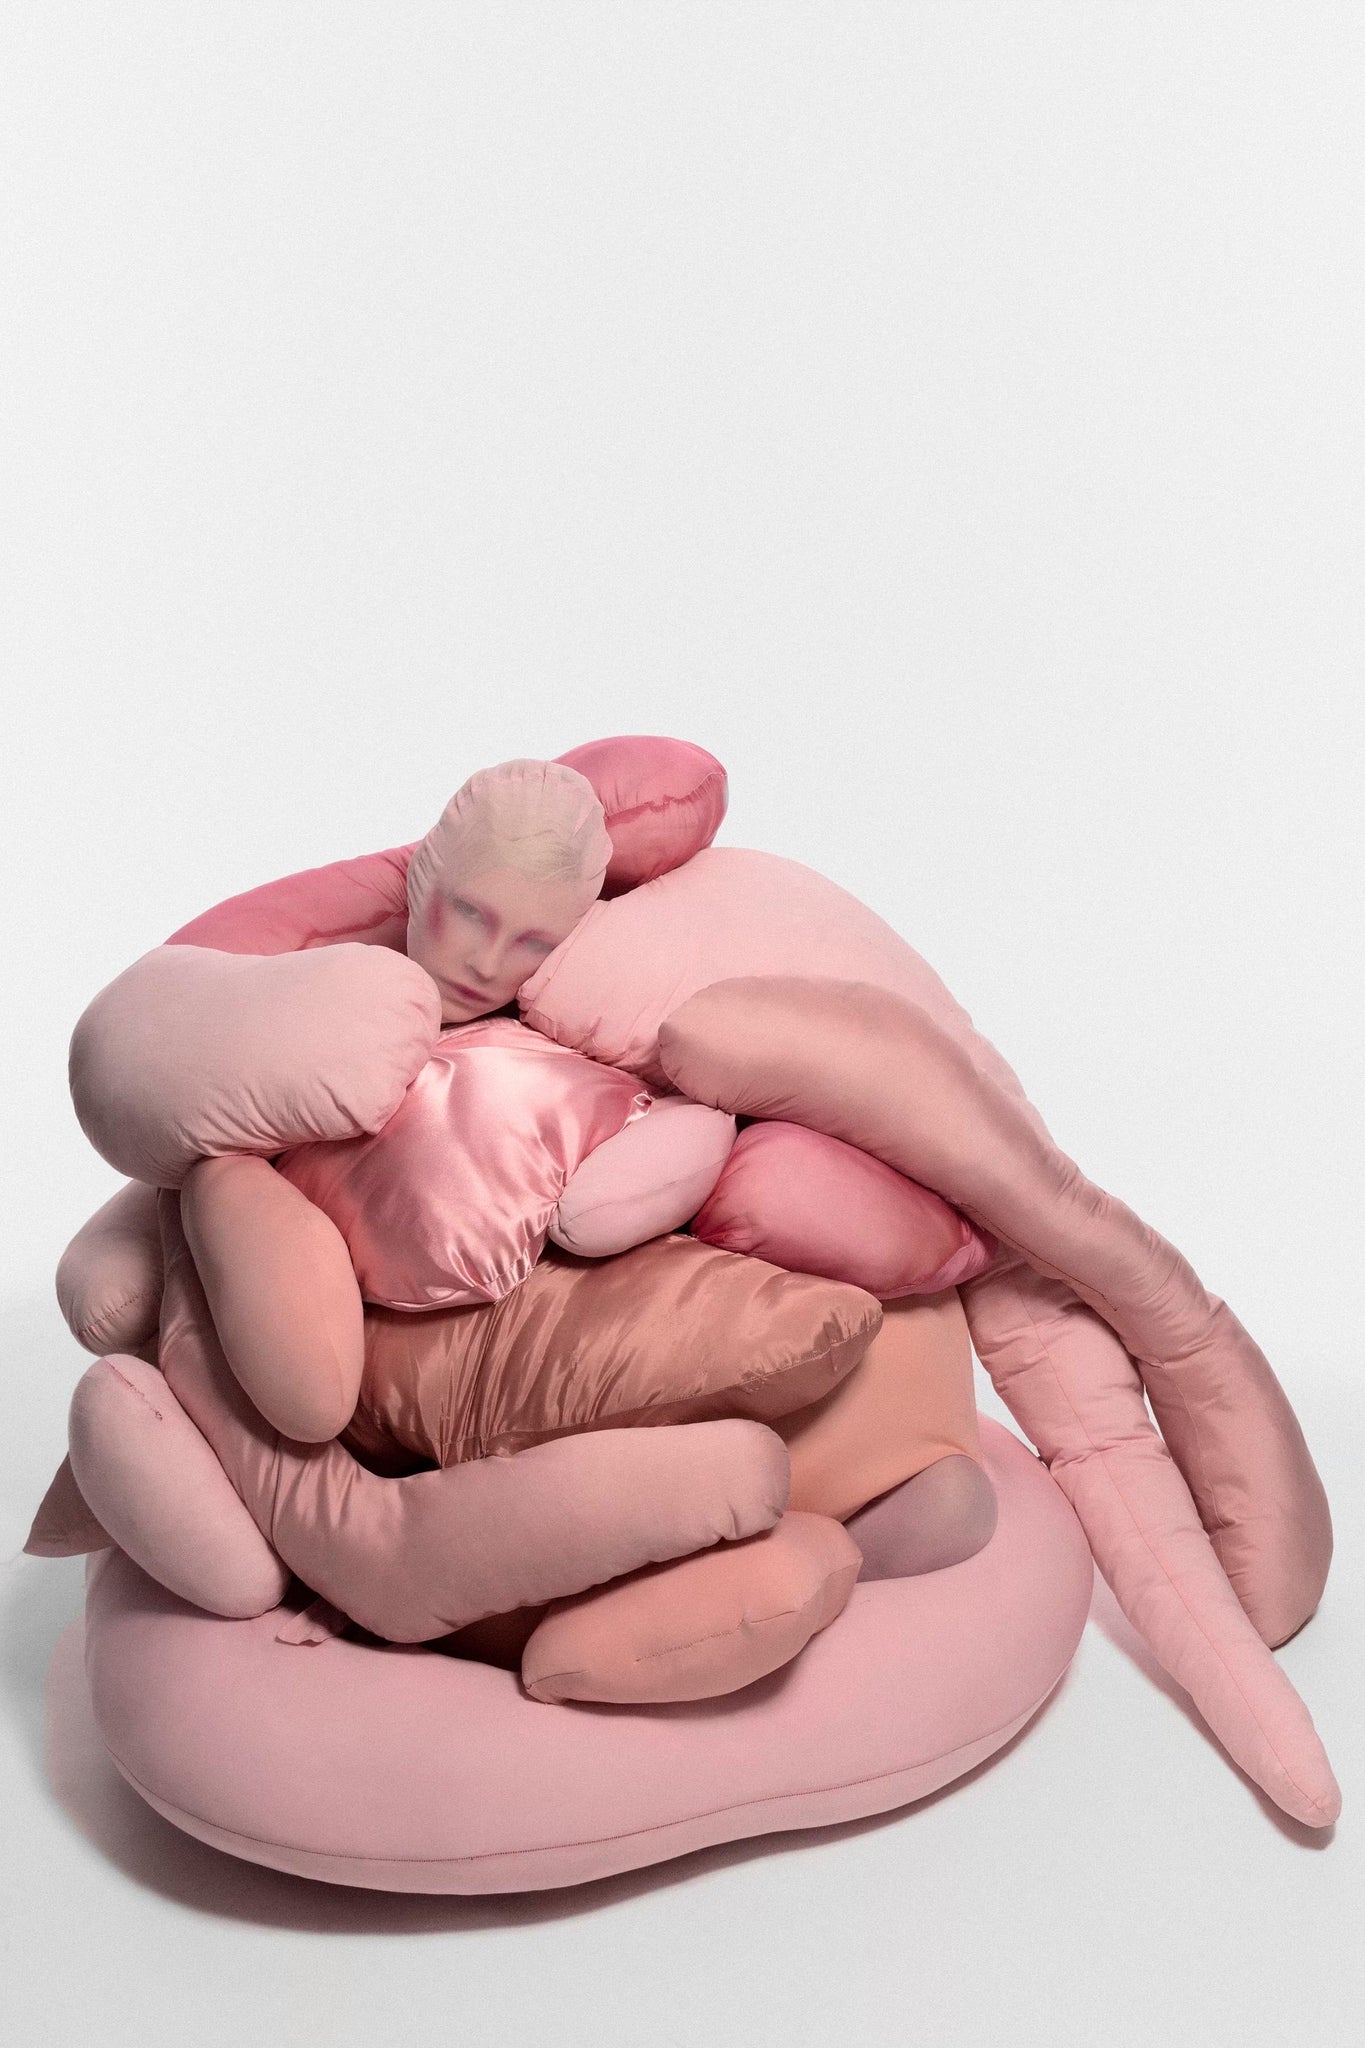 Von Hyin Kolk, "Untitled (womb pillows)"